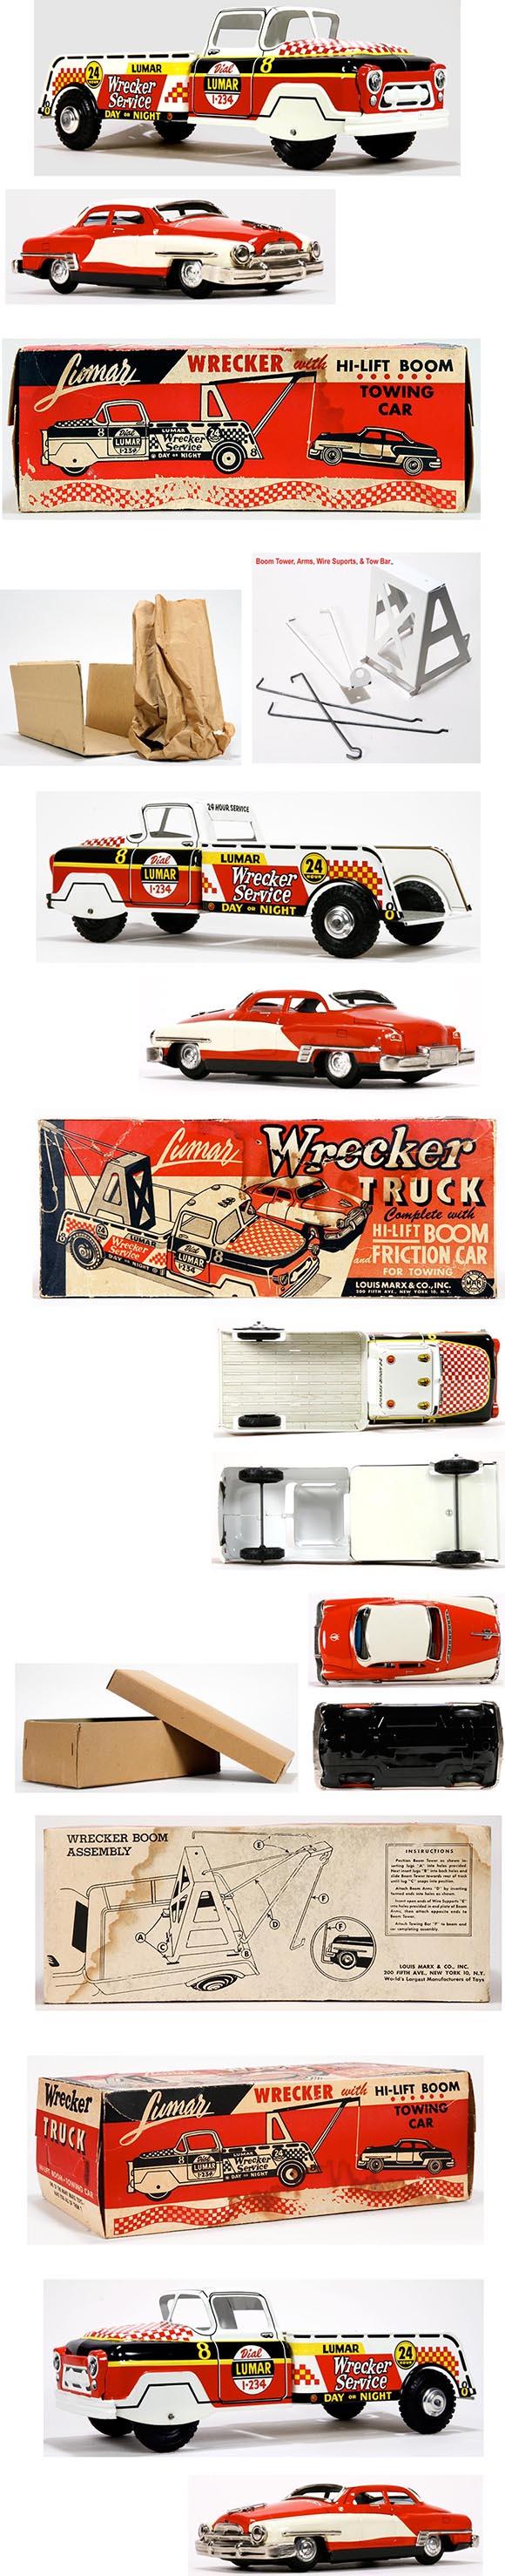 1957 Marx, Lumar Wrecker Truck with Linemar Car (Red) in Original Box